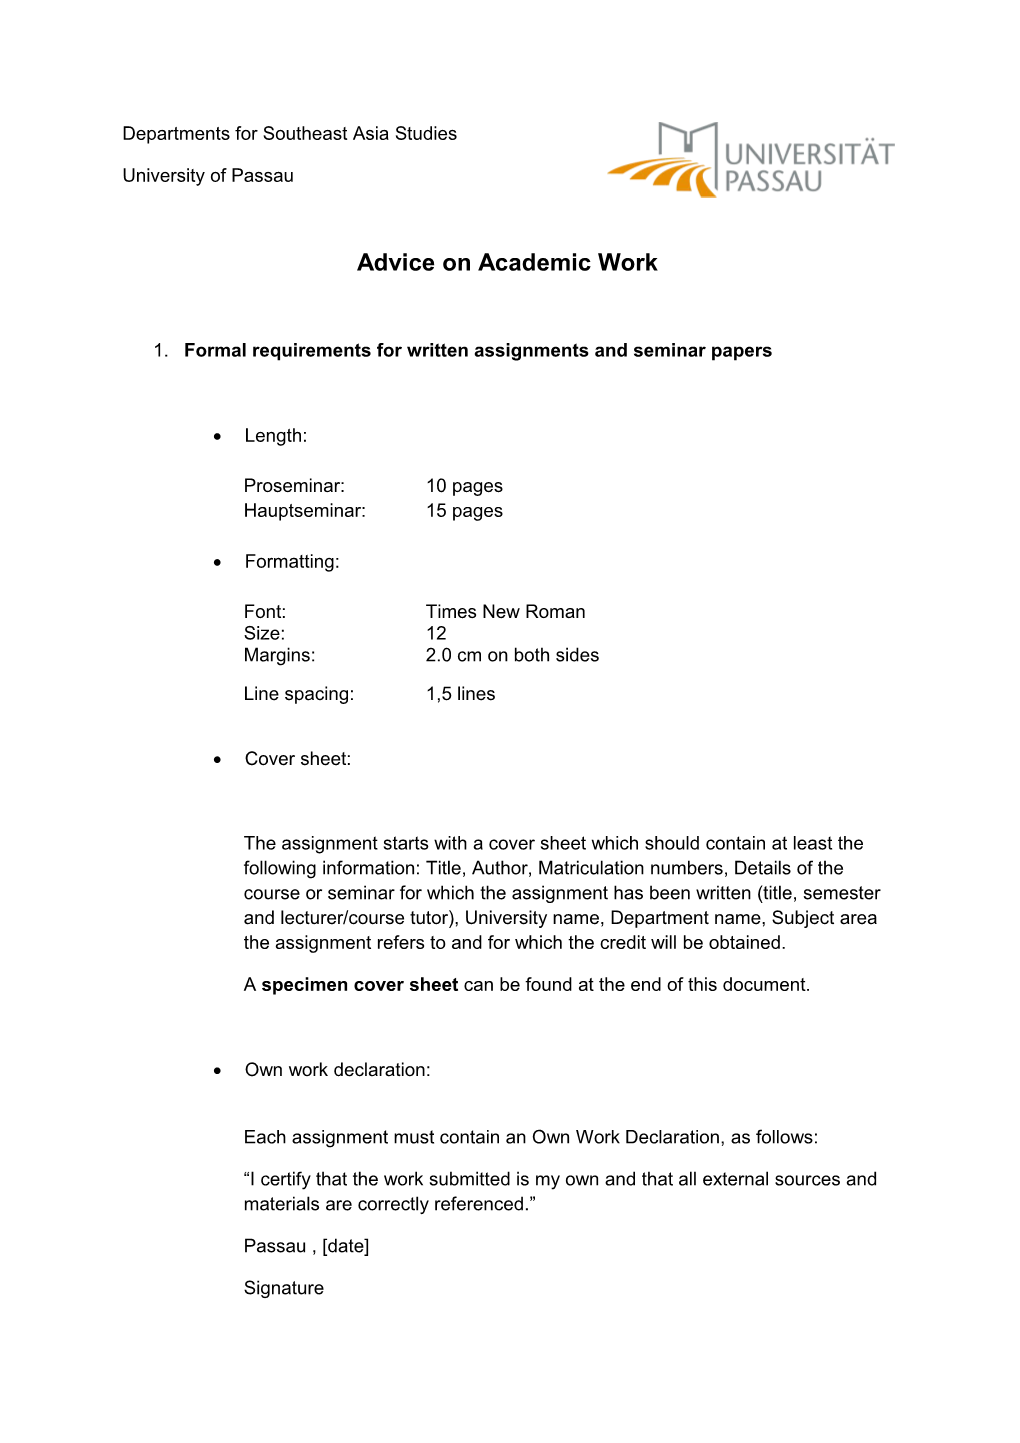 Advice on Academic Work